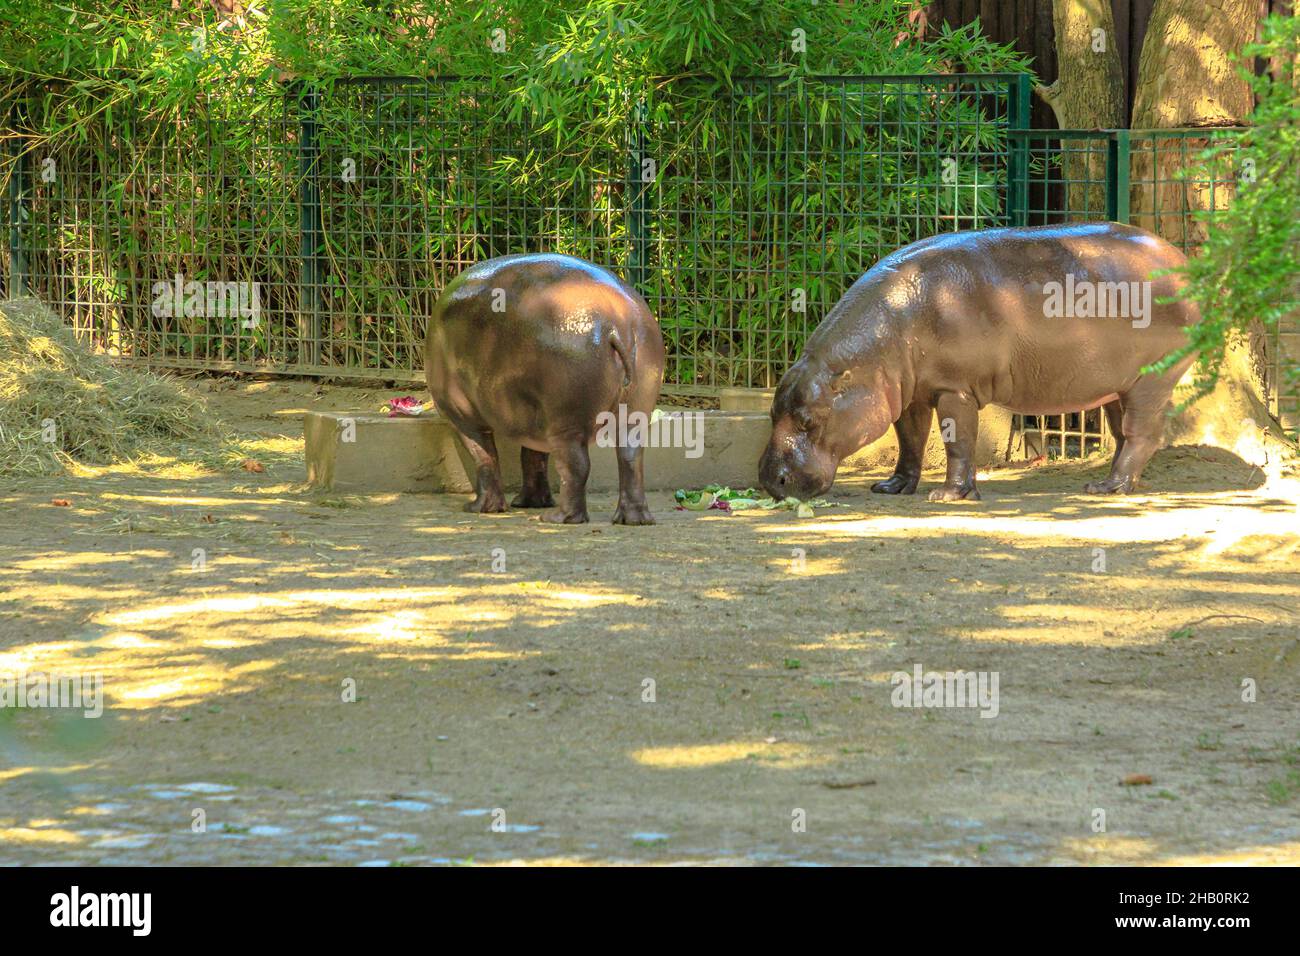 Big hippopotamus eating vegetables. Big five animals of South Africa. Close-up view. Game drive safari. Hippopotamus amphibius species. Stock Photo